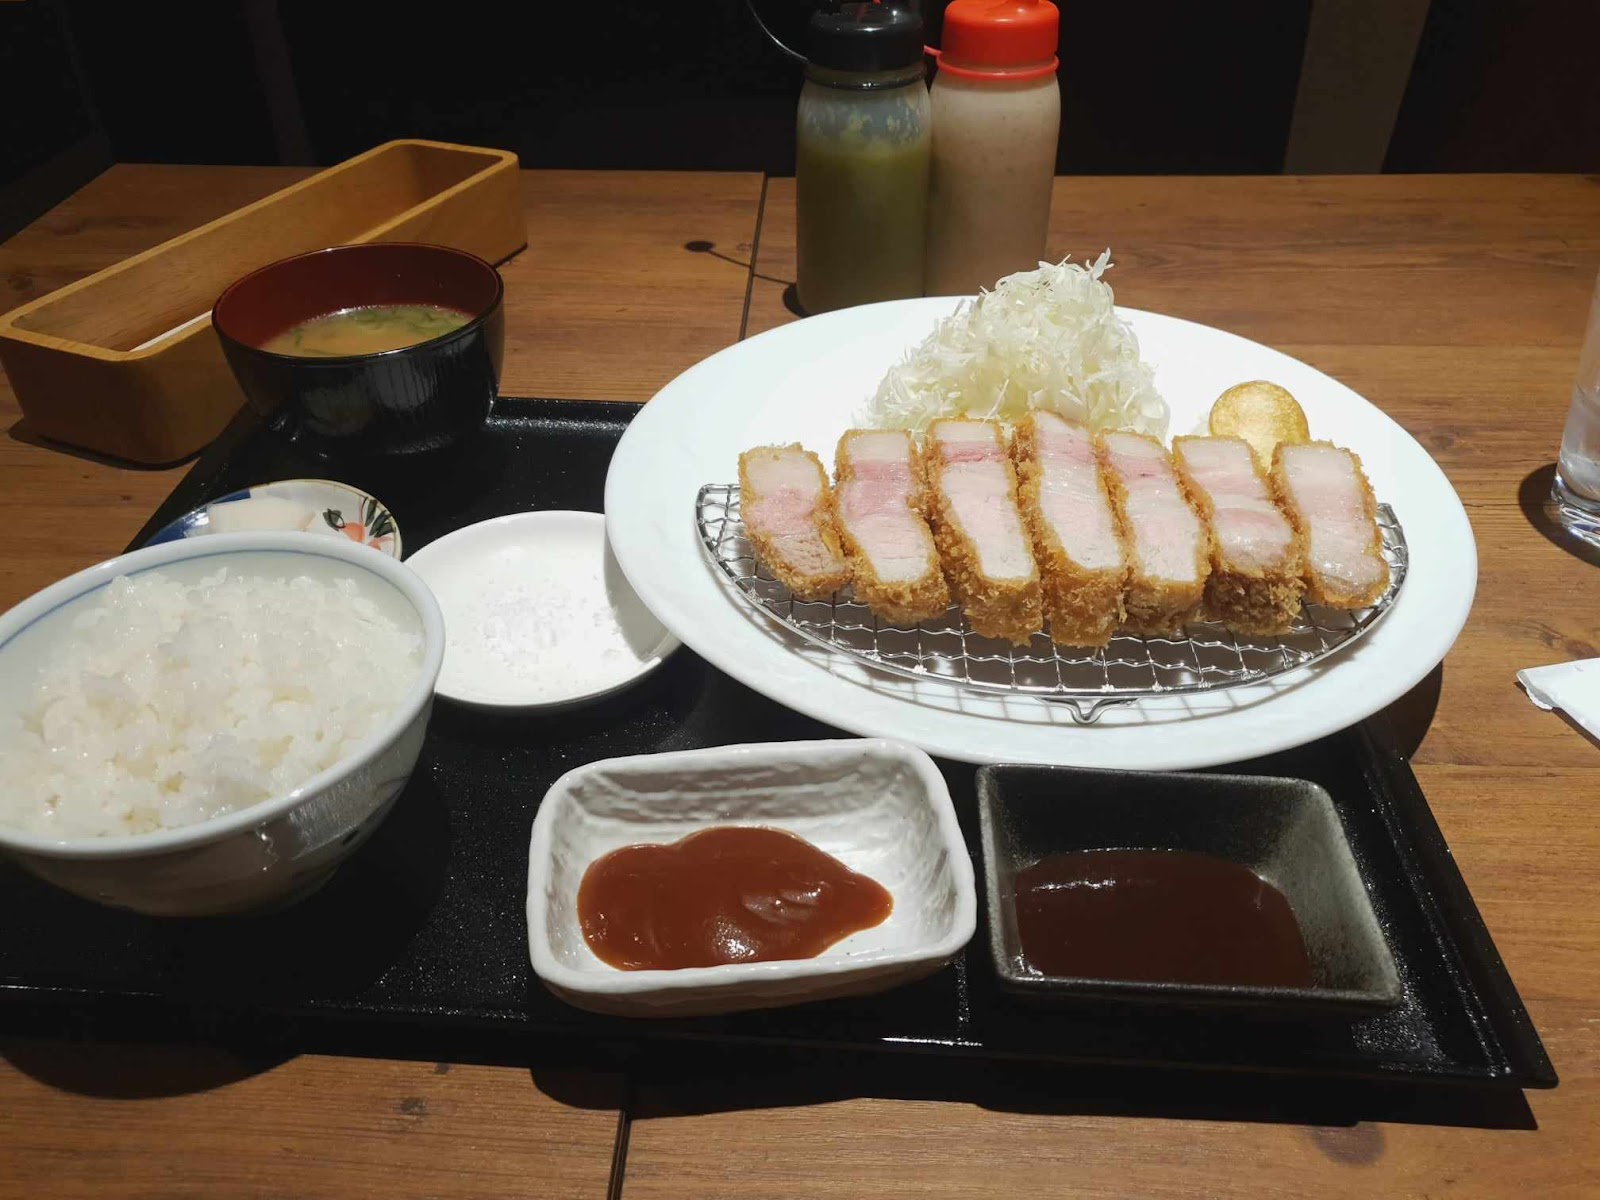 Full tonkatsu spread at Tonkatsu KATSU Hana in Osaka